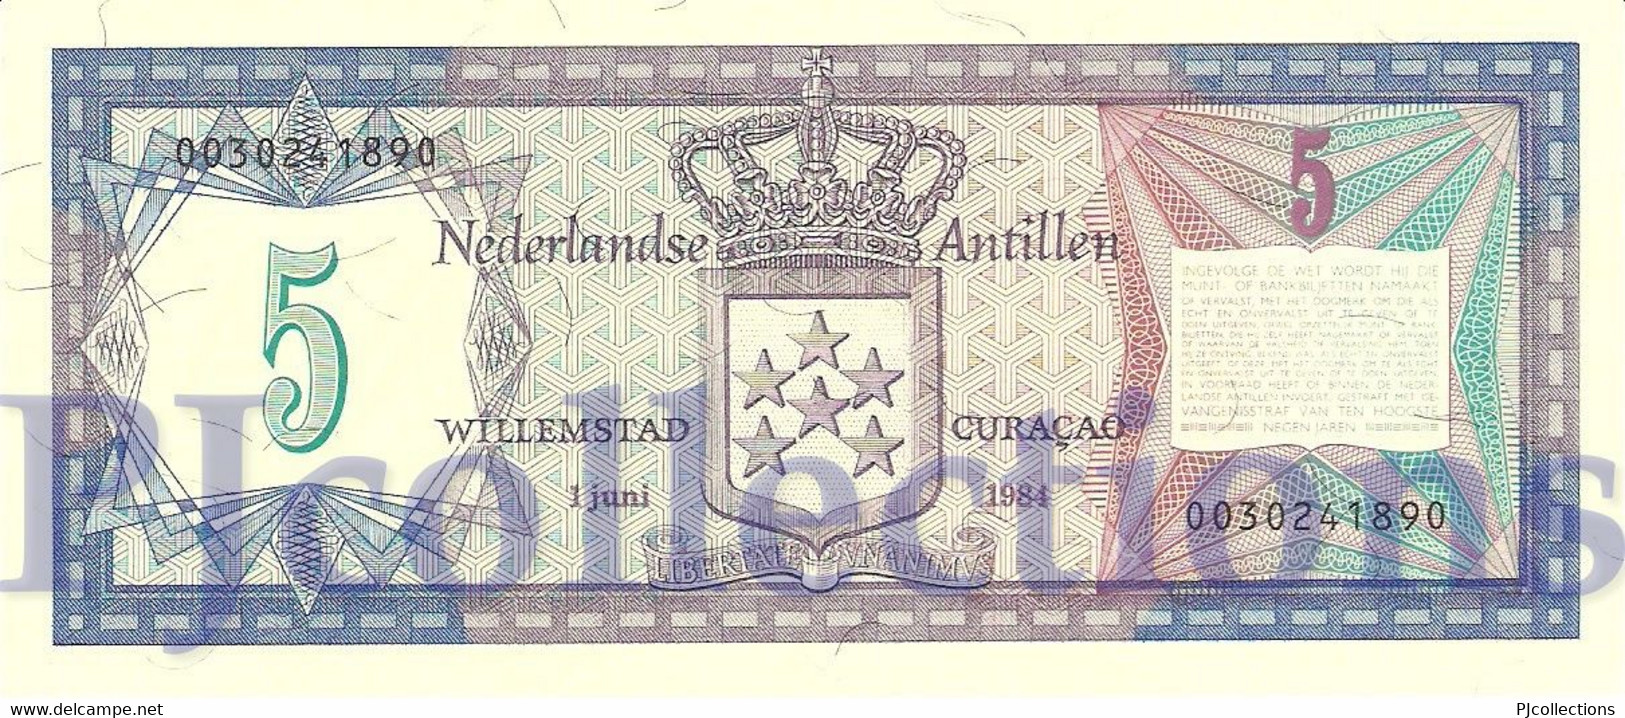 NETHERLANDS ANTILLES 5 GULDEN 1984 PICK 15b UNC - Antillas Neerlandesas (...-1986)